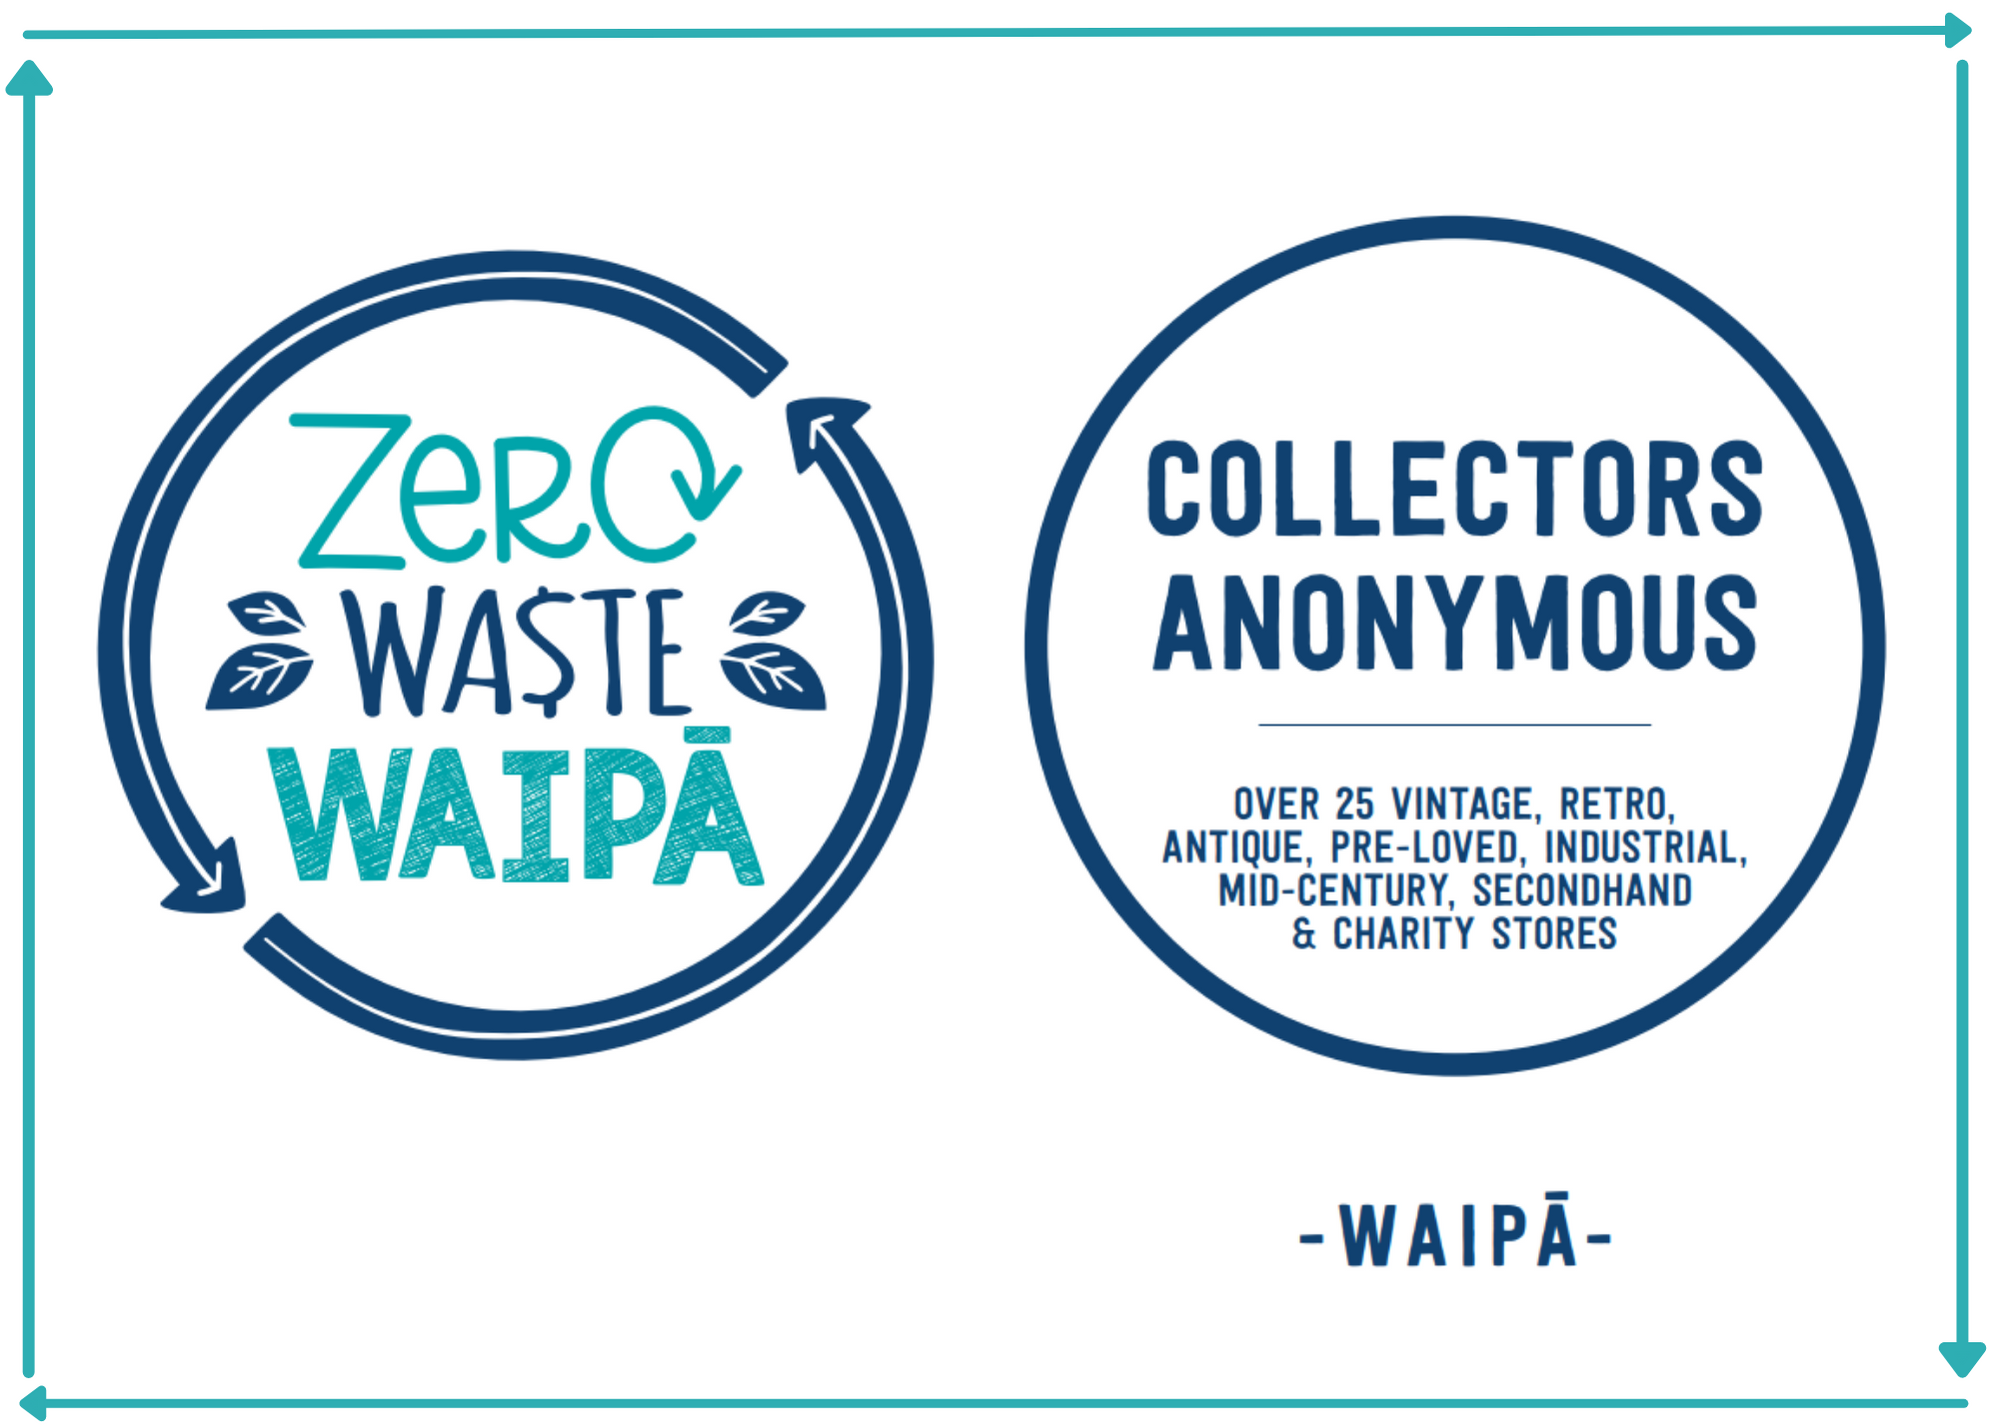 Zero Waste Waipa and Collectors Anonymous logos. 